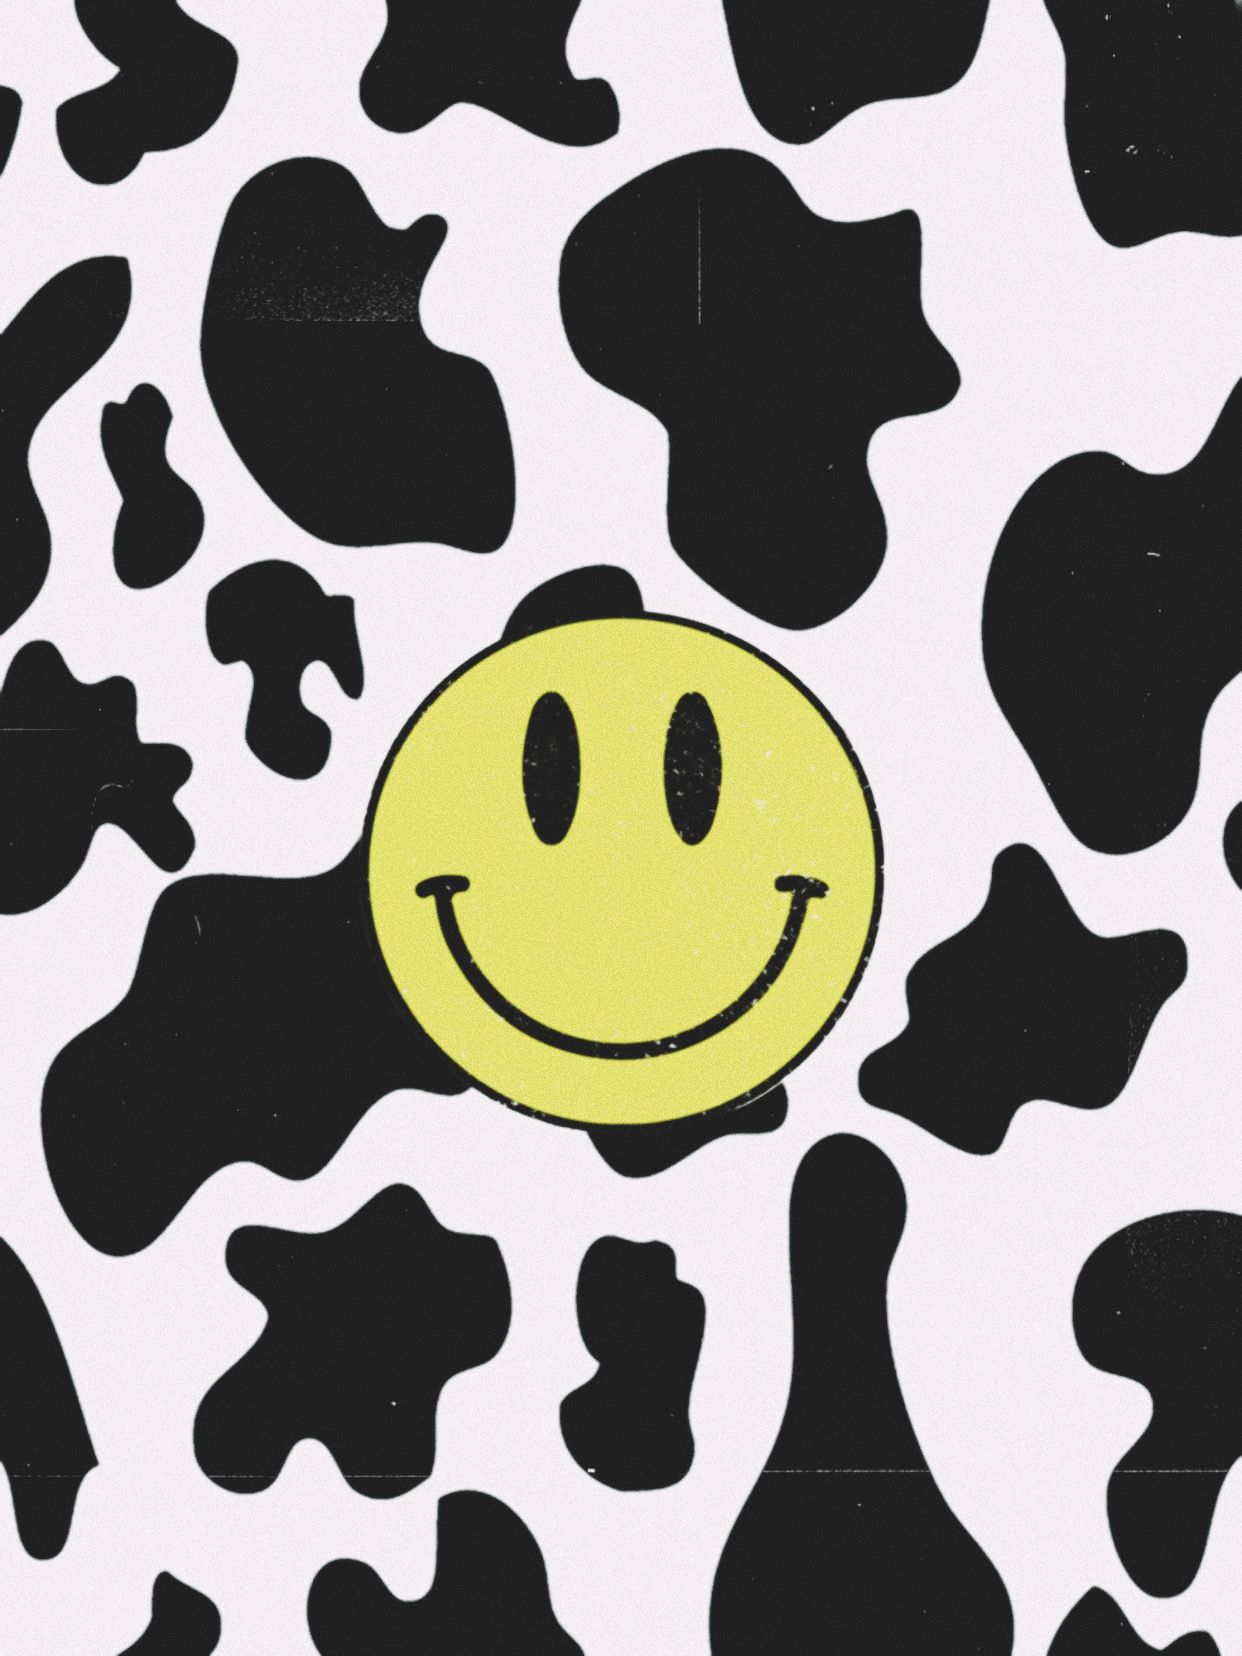 Smiley face wallpaper. Cow print wallpaper, Cow wallpaper, iPhone wallpaper pattern